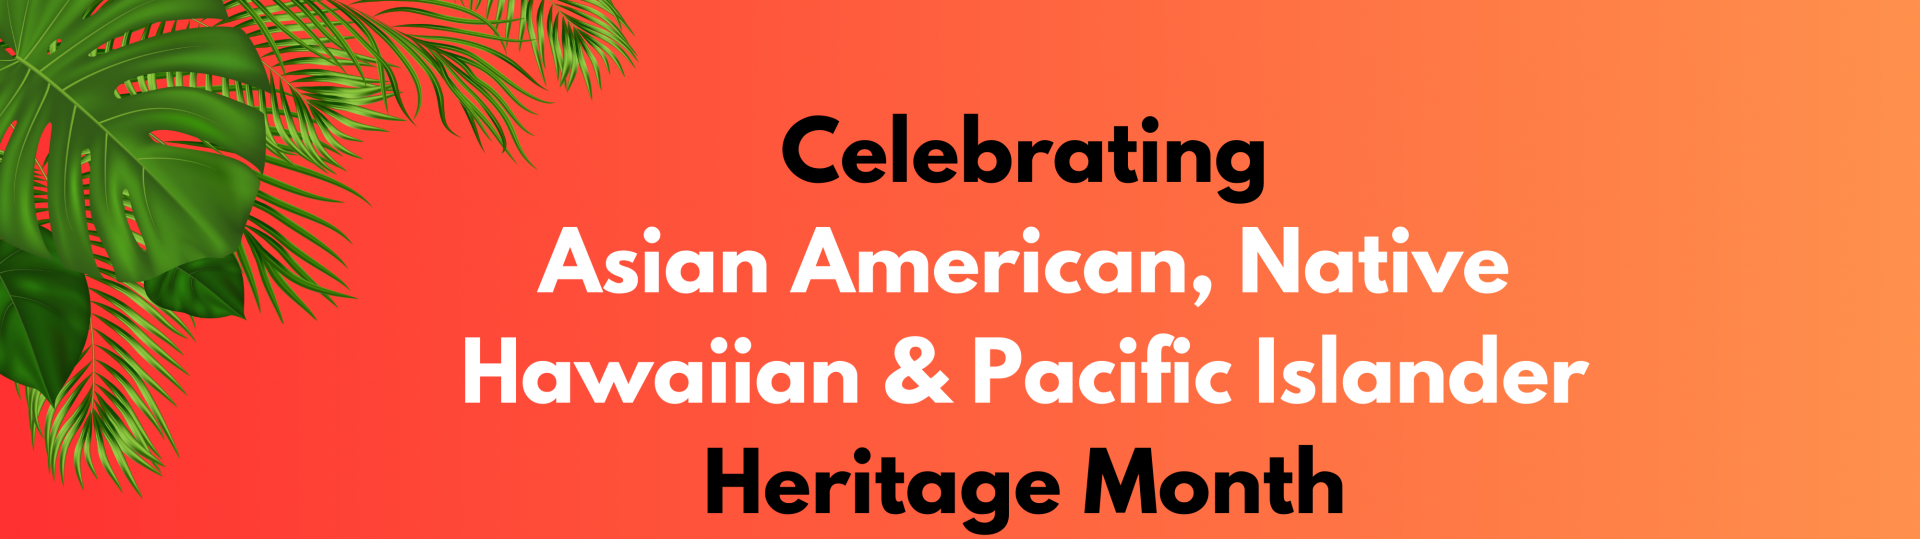 Celebrating Asian American Native Hawaiian Pacific Islander Heritage Month